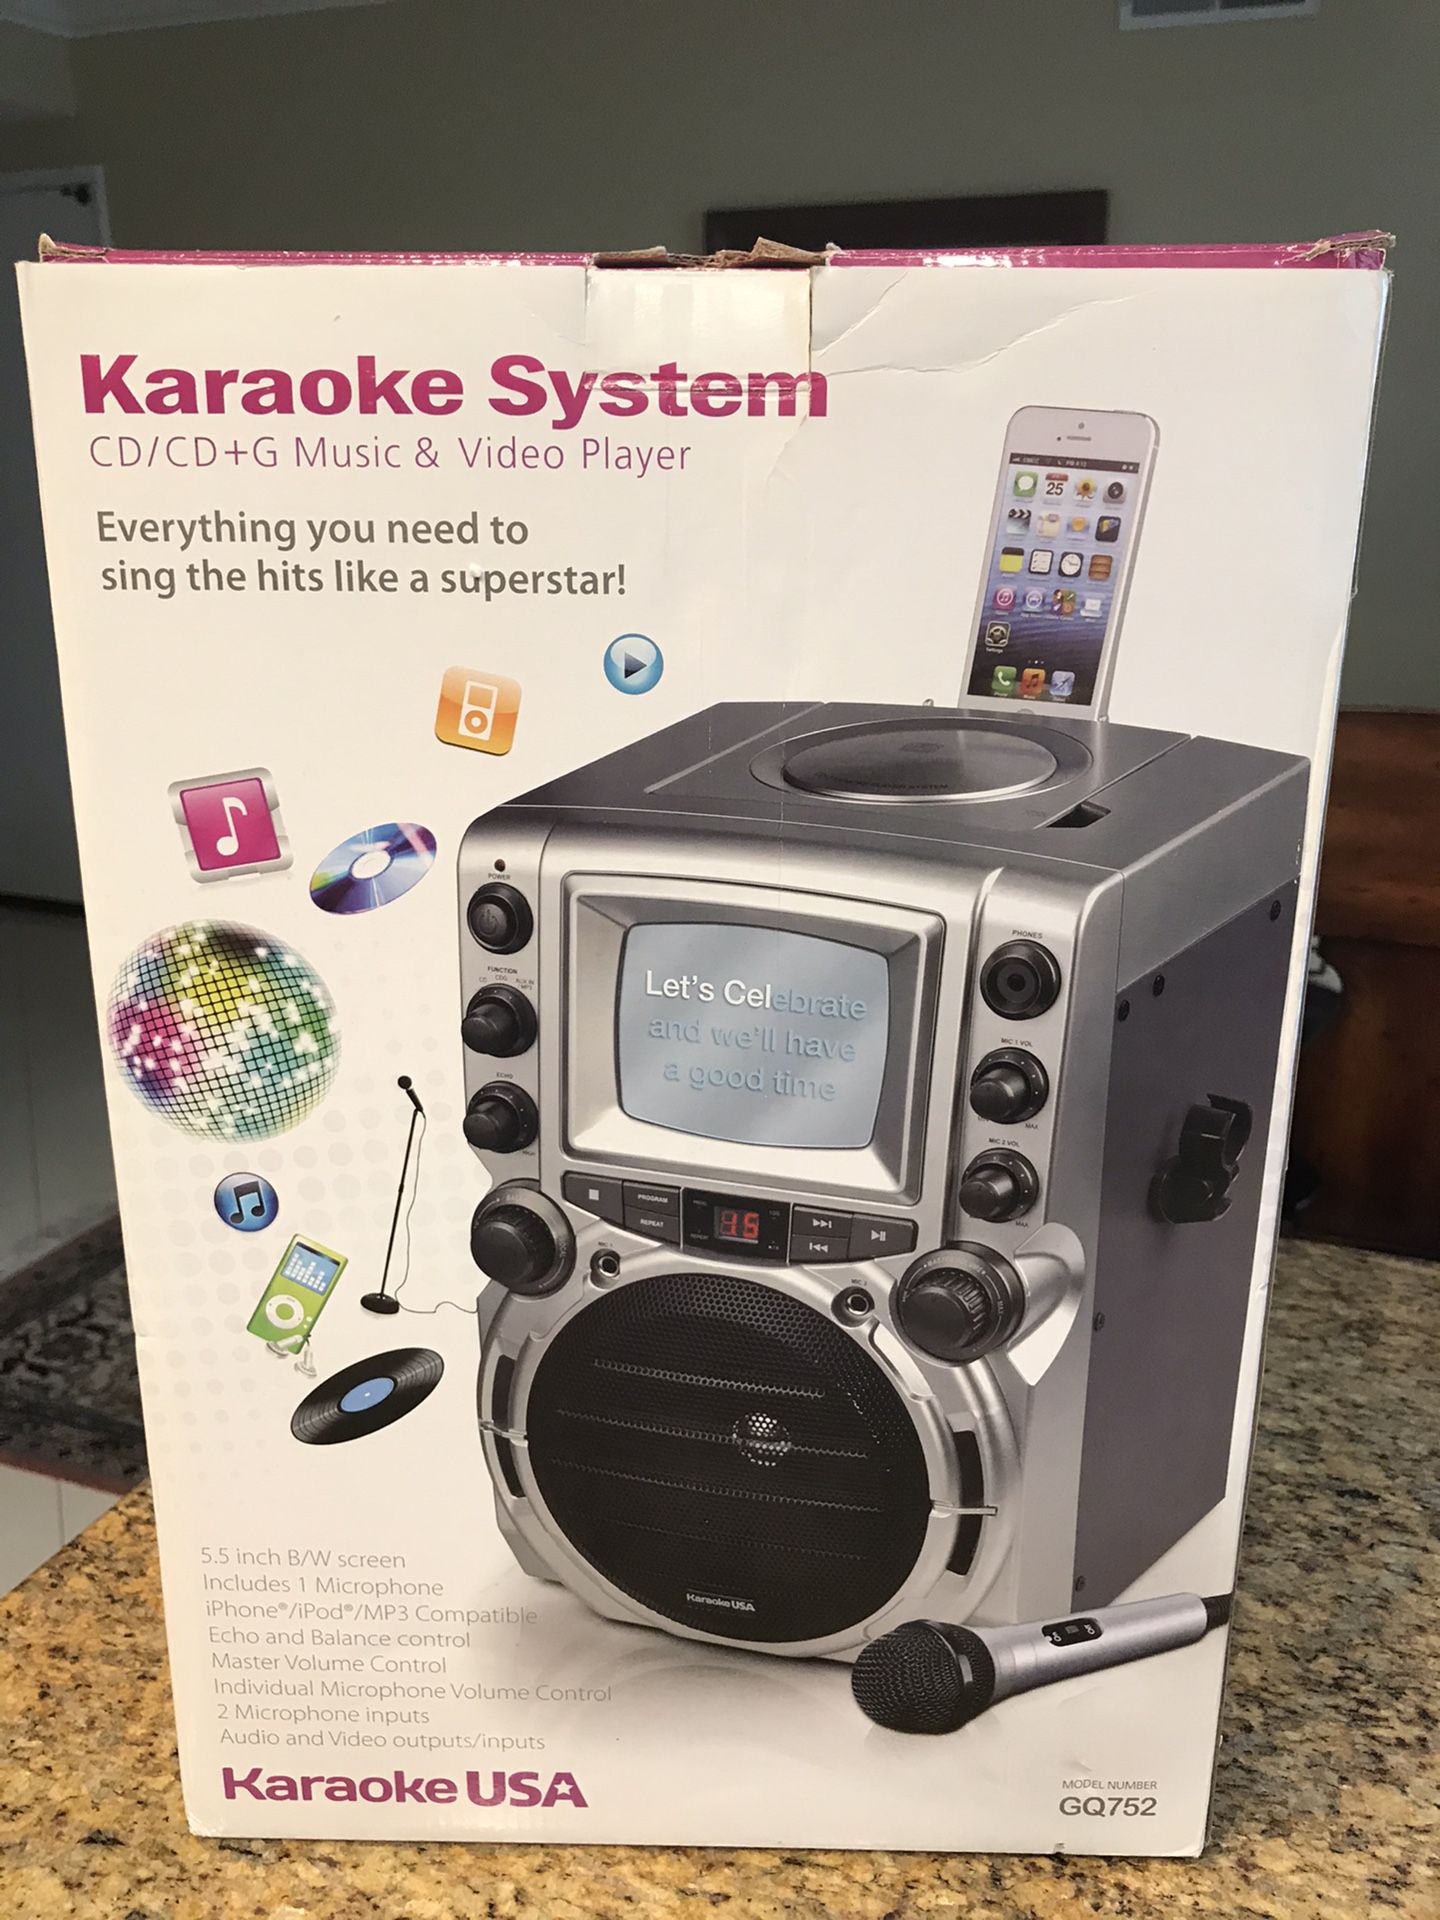 Karaoke System with 4.3” Screen by Karaoke USA